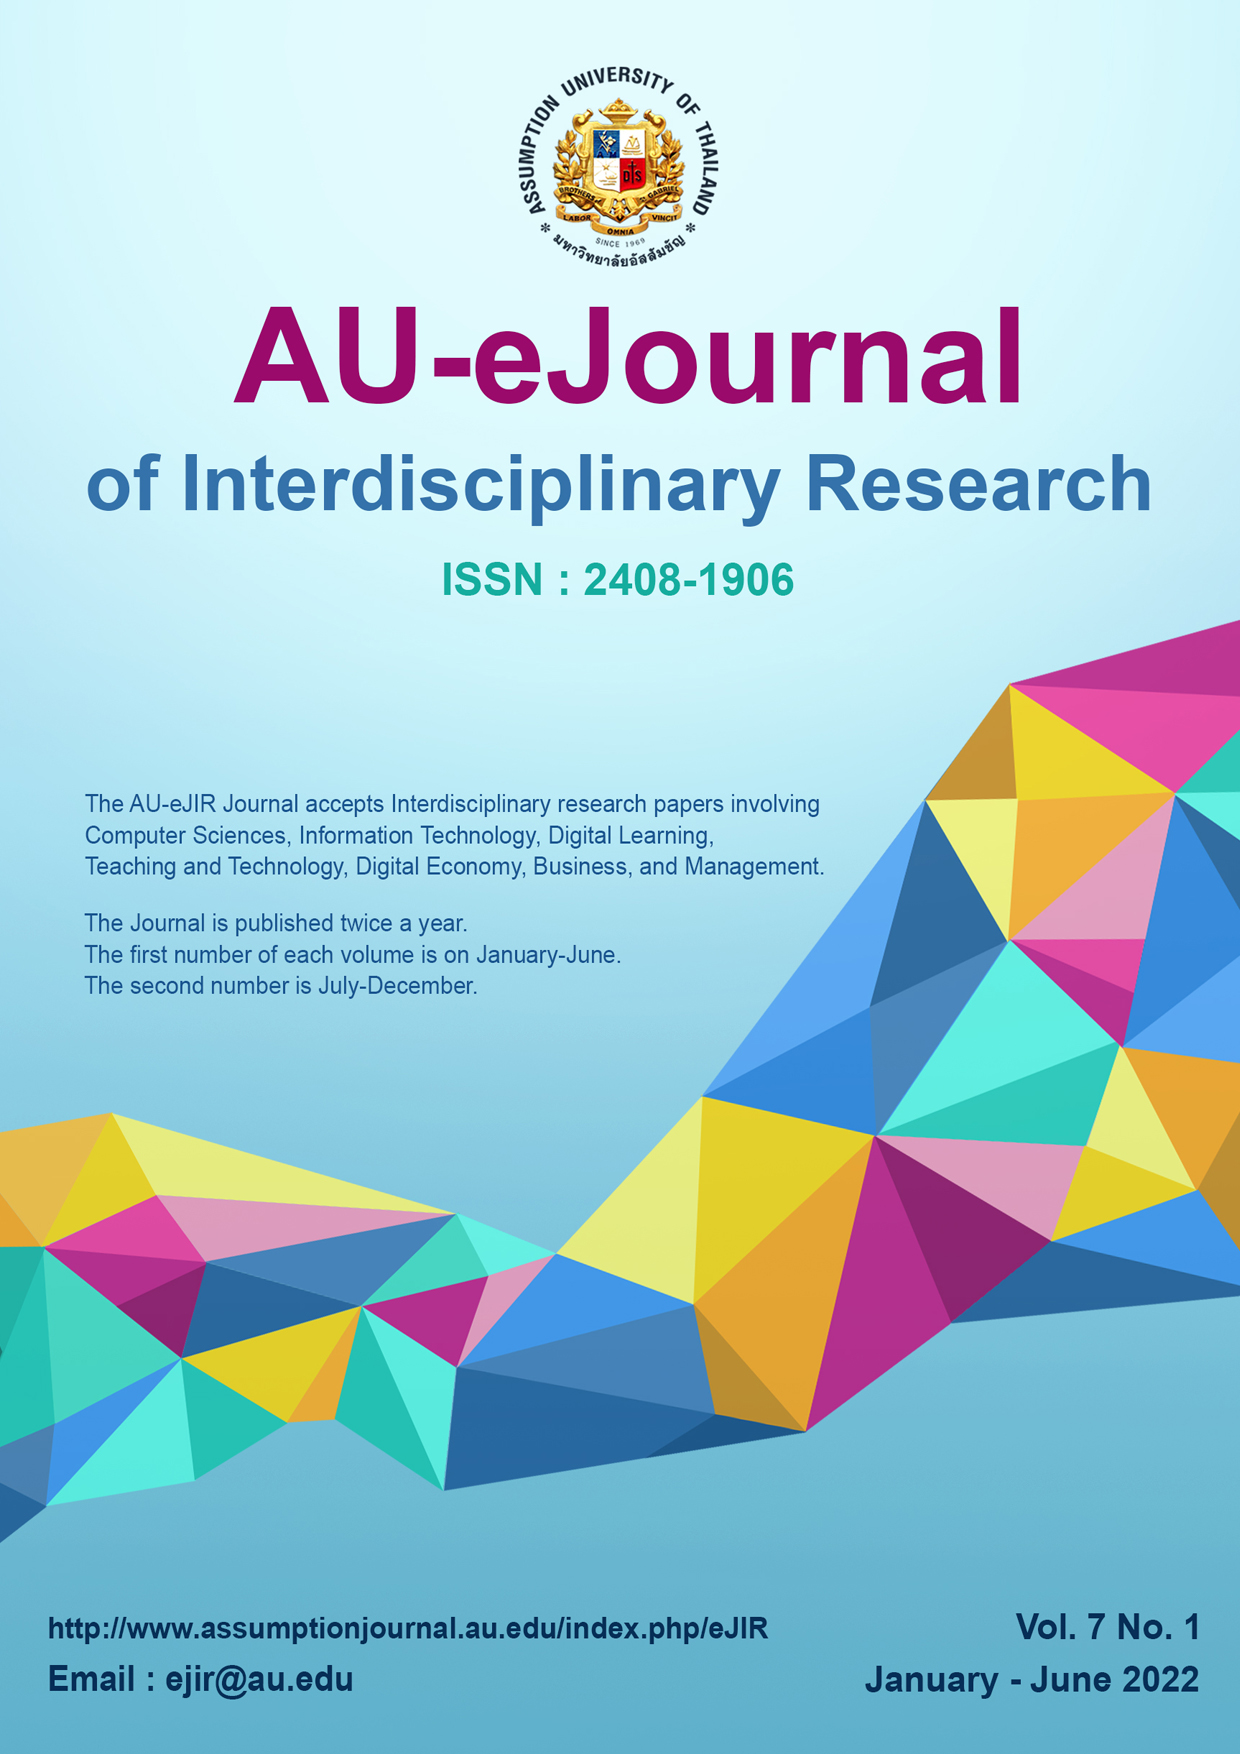 					View Vol. 7 No. 1 (2022): AU-EJOURNAL OF INTERDISCIPLINARY RESEARCH (AU-EJIR 7.1)
				